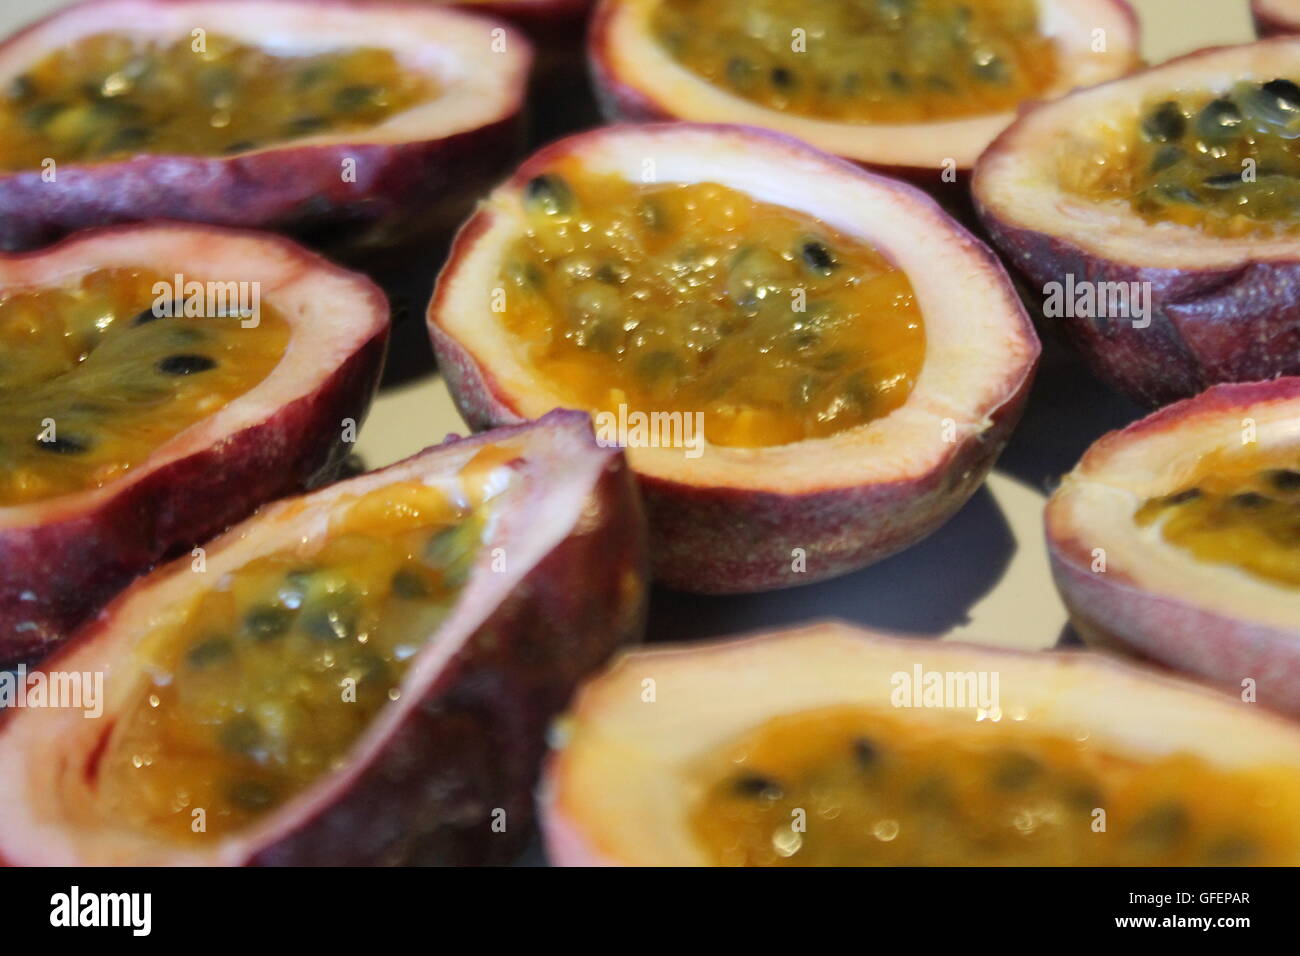 Passion fruit open cut in half maracuya Stock Photo